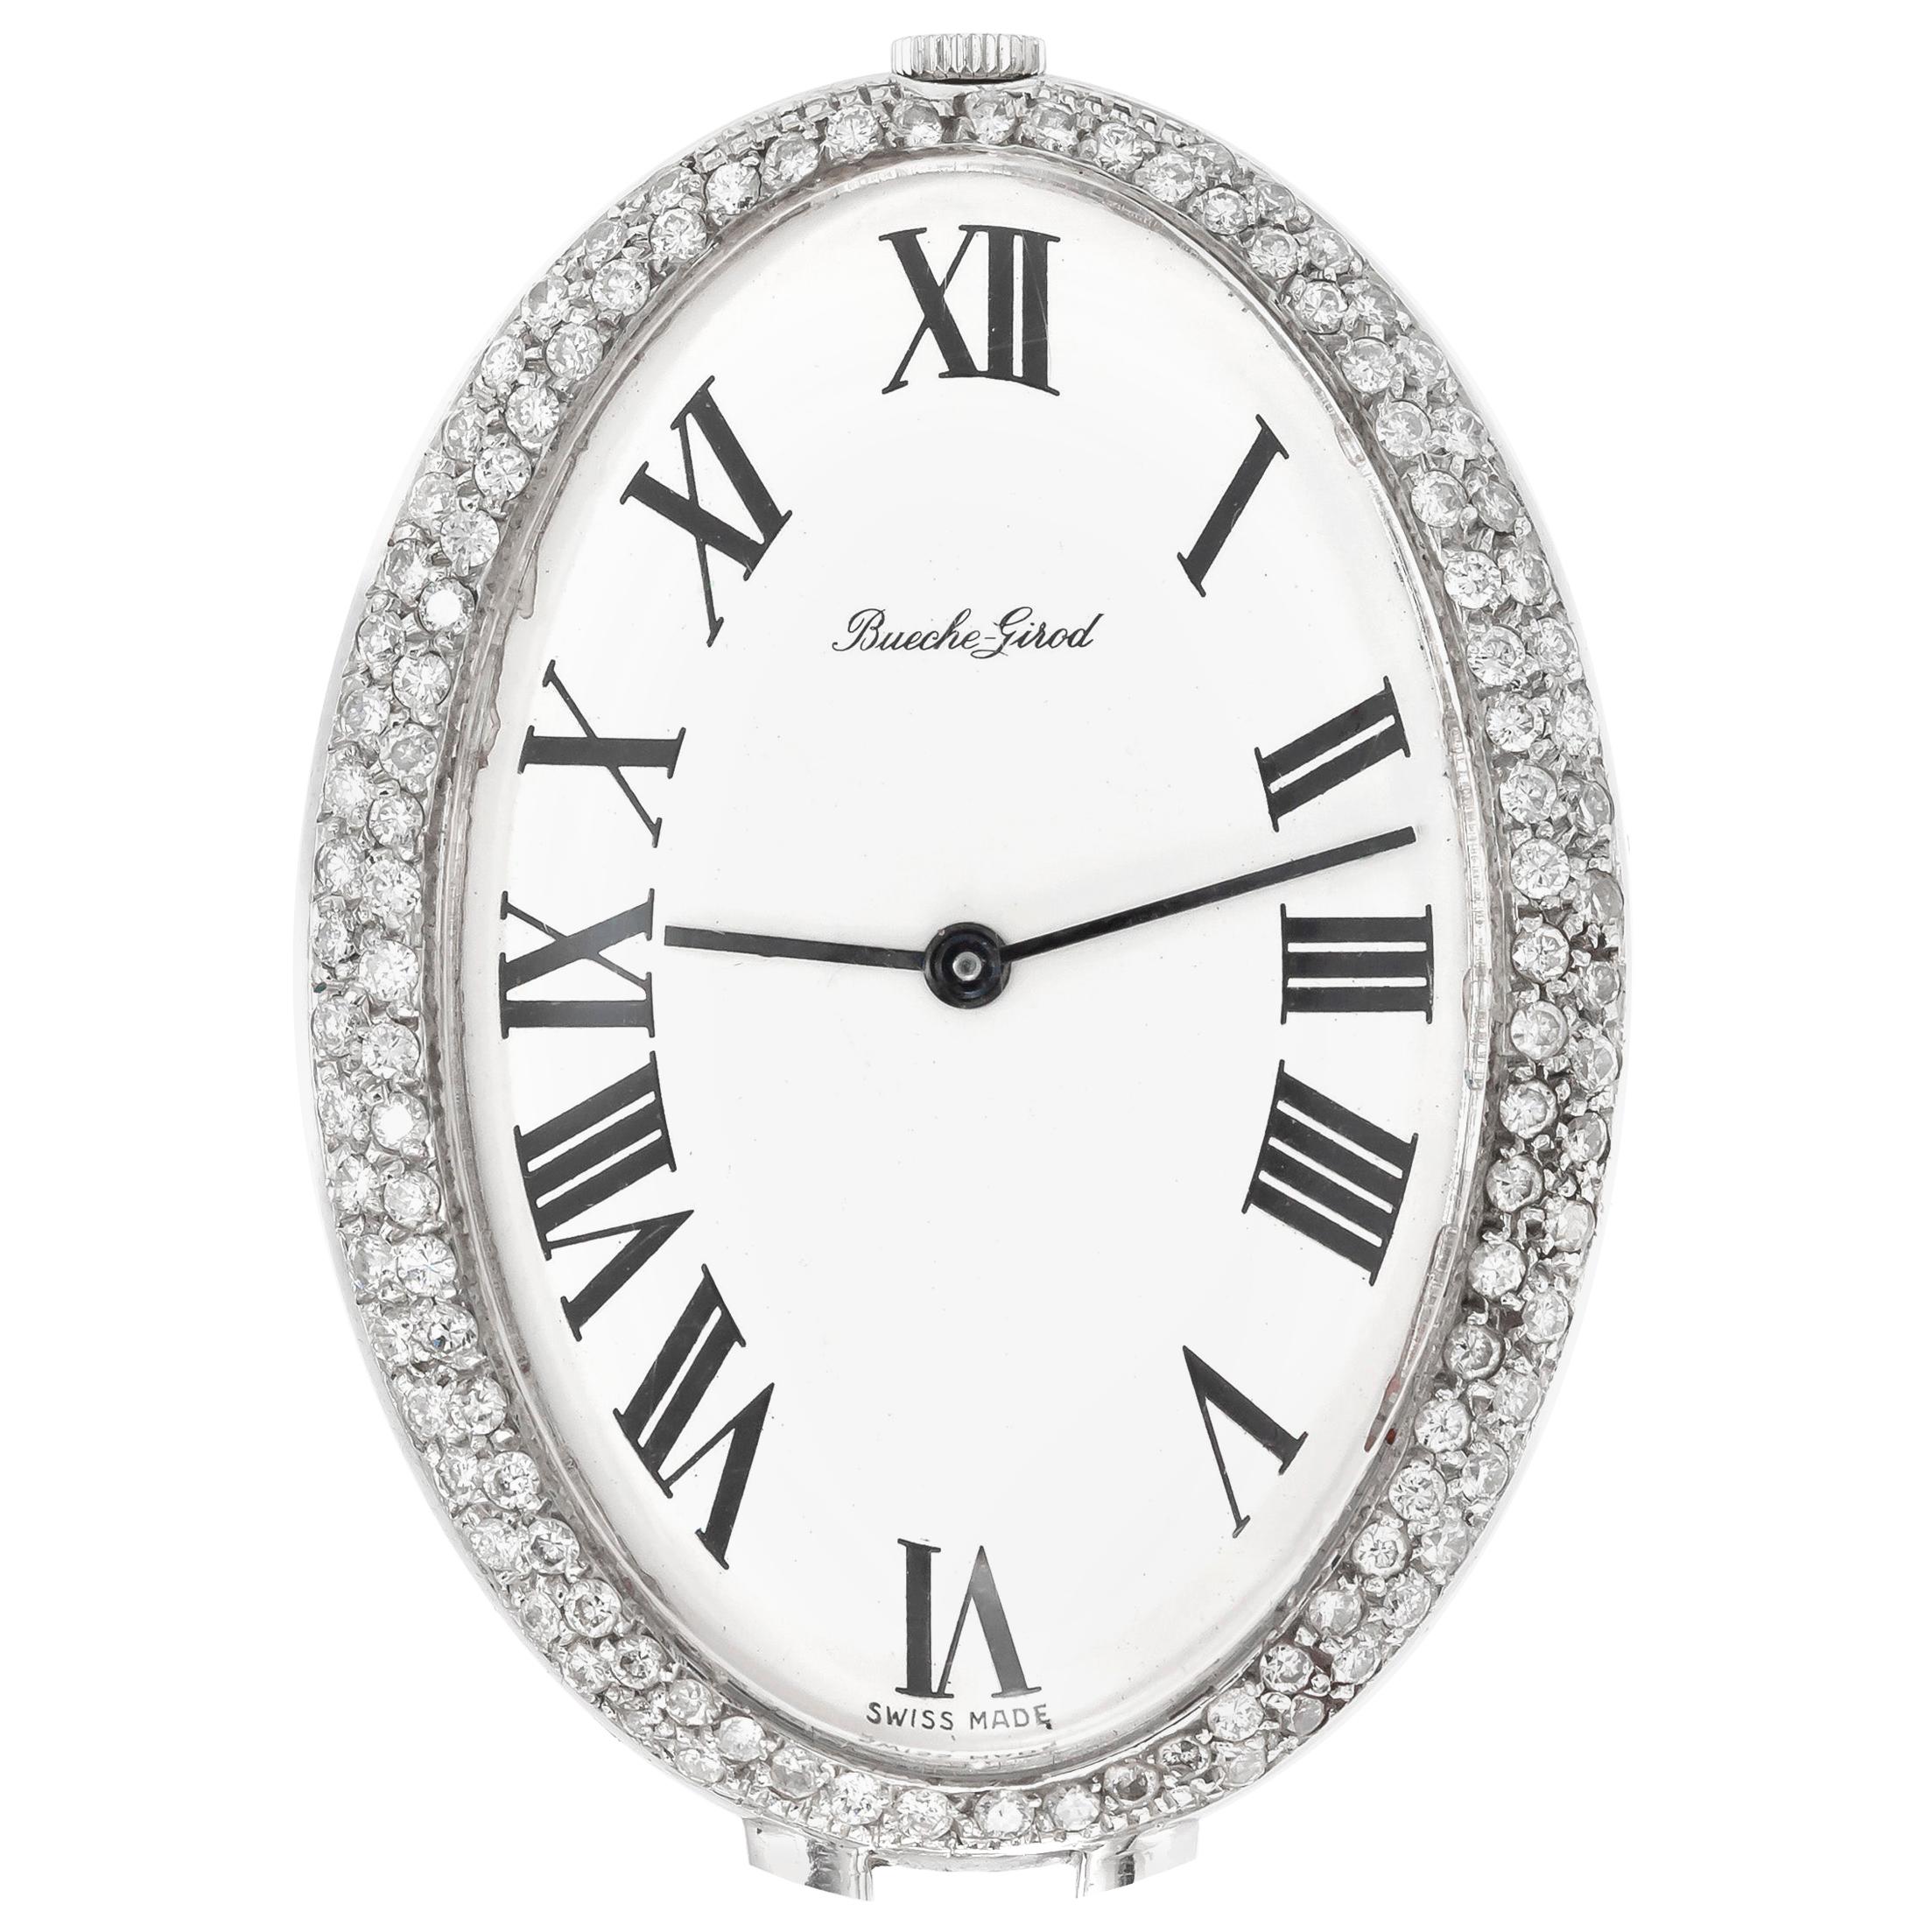 Bueche-Girod 6.00 Carat Diamond Pocket Watch